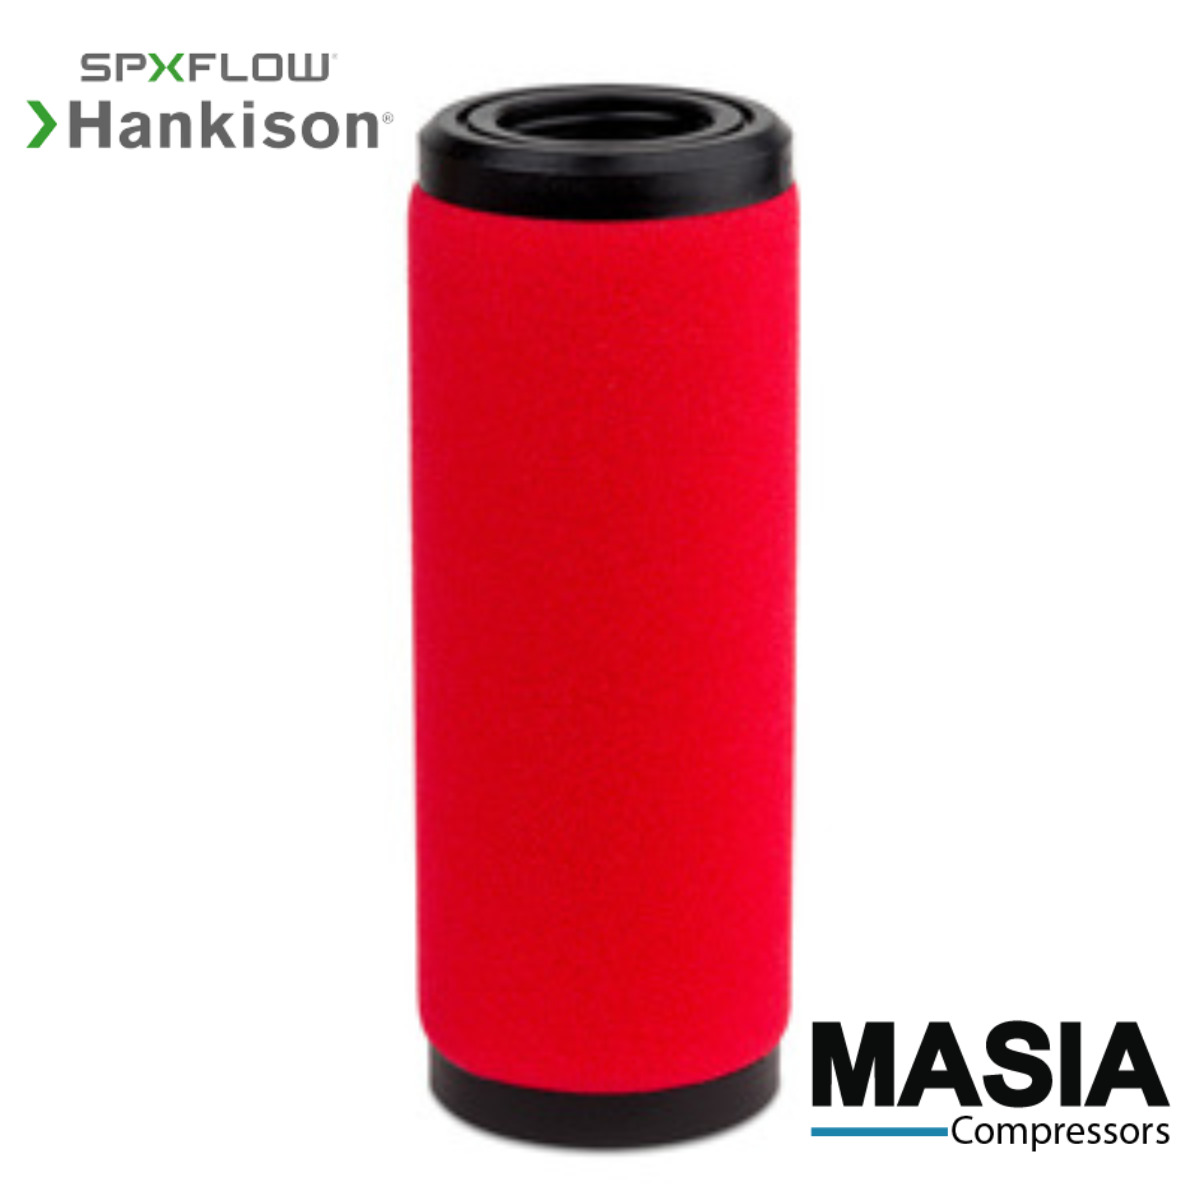 E5-20 Genuine Hankison Element Filter (fits In Hf5-20 Housing)